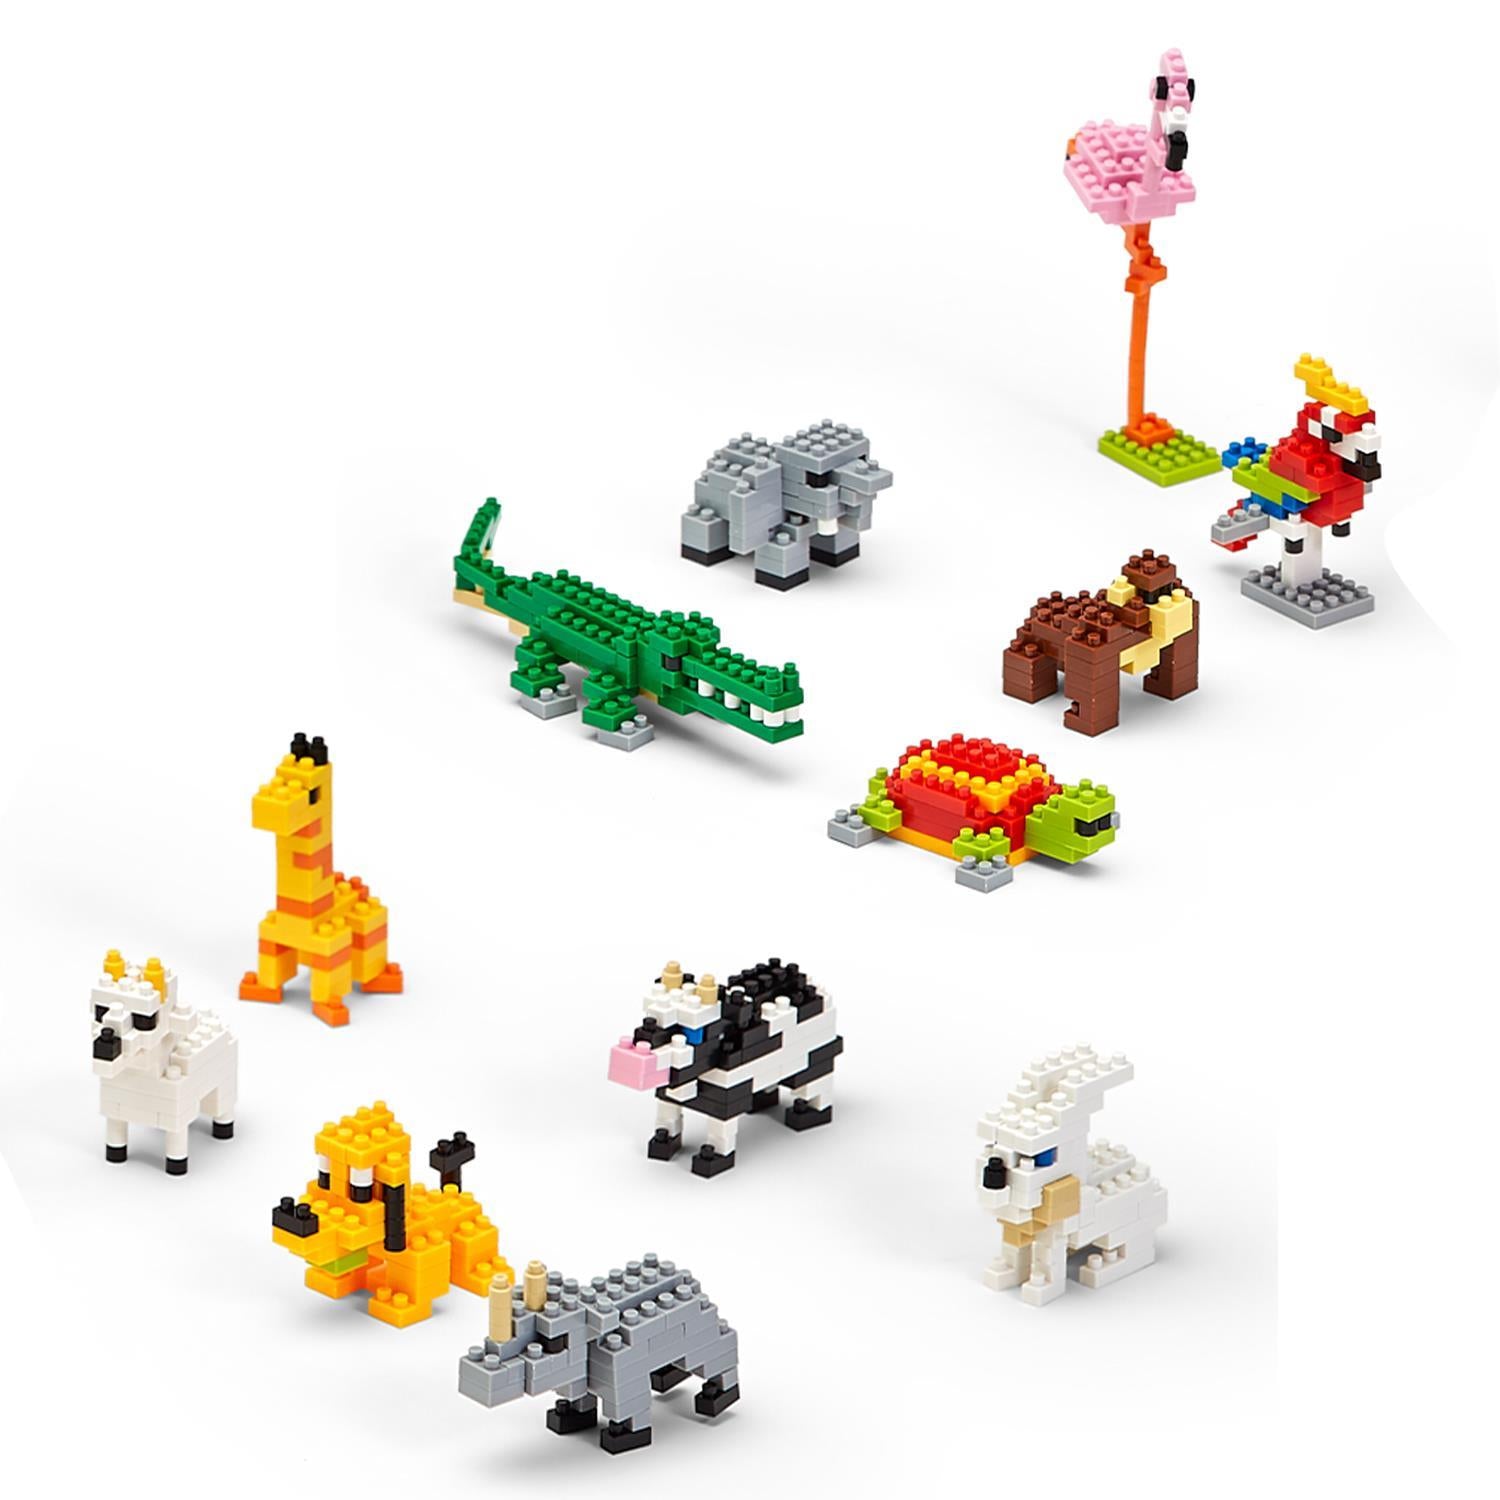 Littleboyny Insect Block Set of 4 Mini Building Blocks, Toys